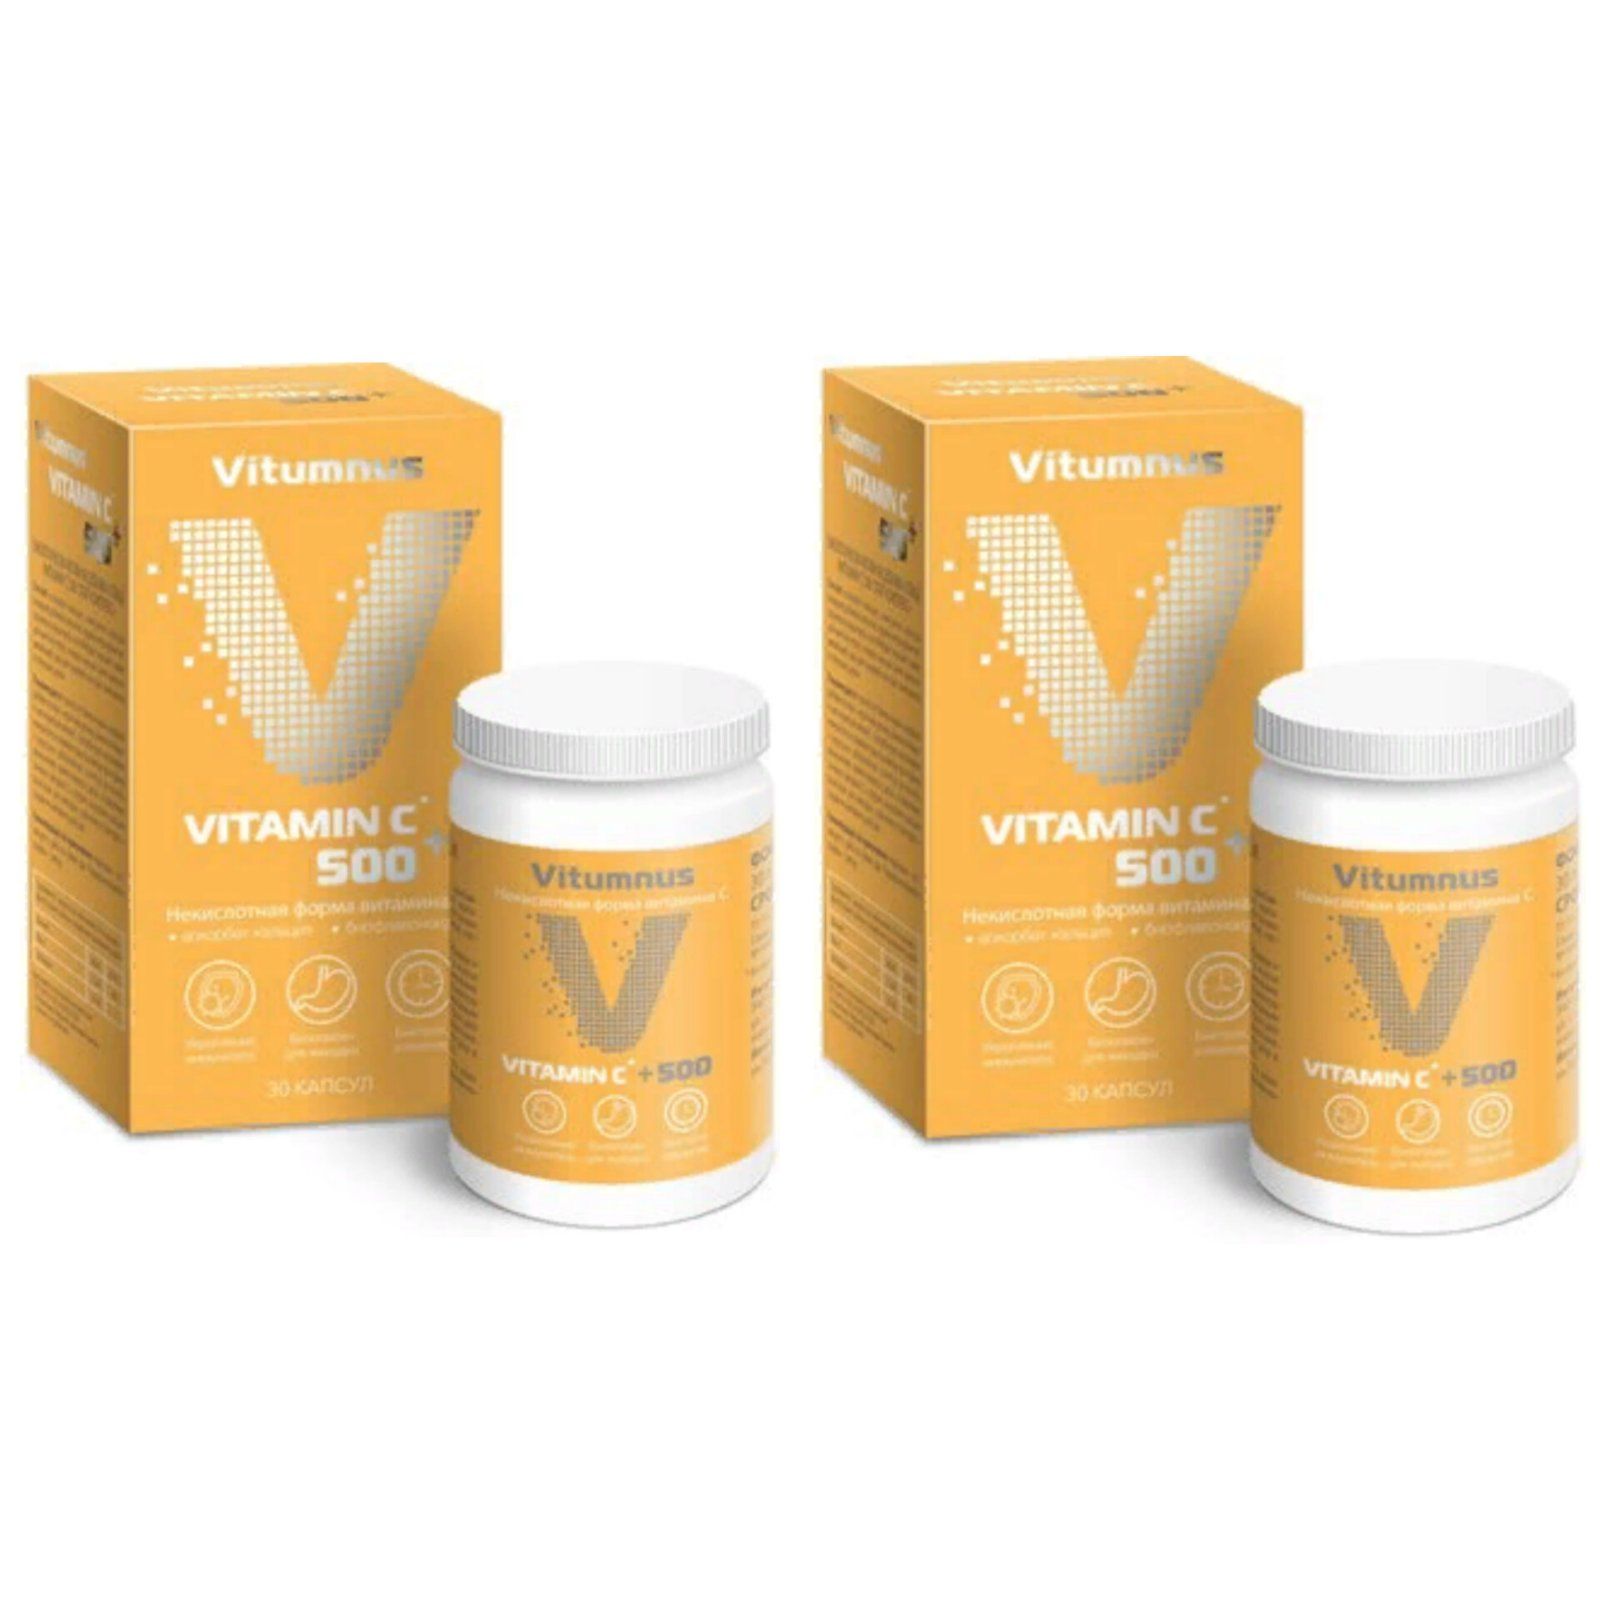 Vitumnus д3 витамин. Vitumnus витамины d3. Флутимакс с 500. Vitumnus шипучие витамины. Витамины группы b Vitumnus.